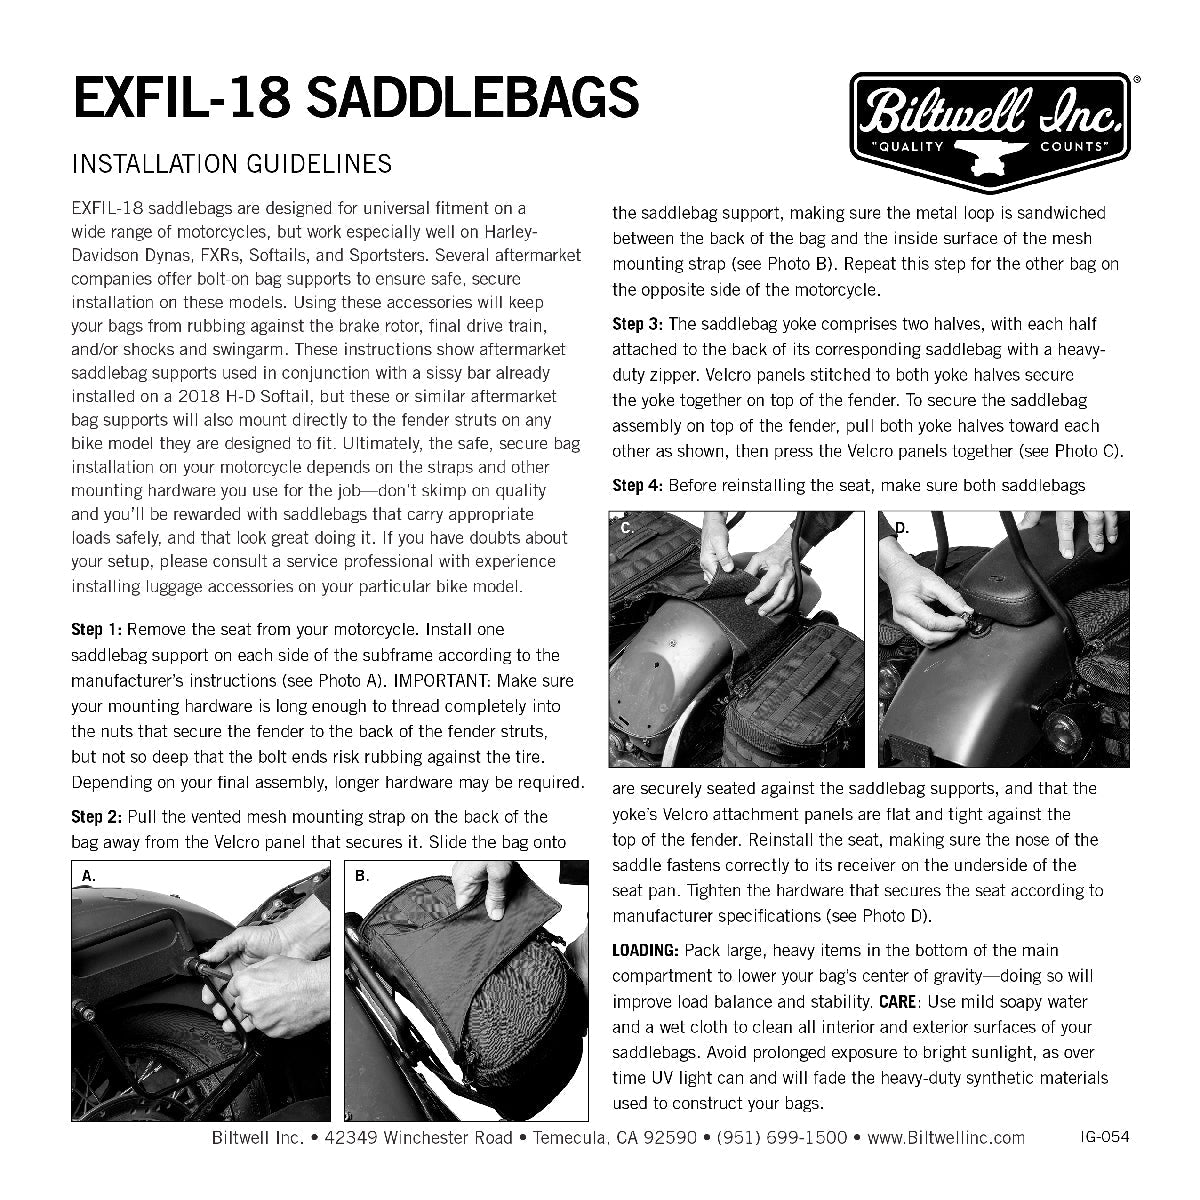 EXFIL-18 Saddlebag Replacement